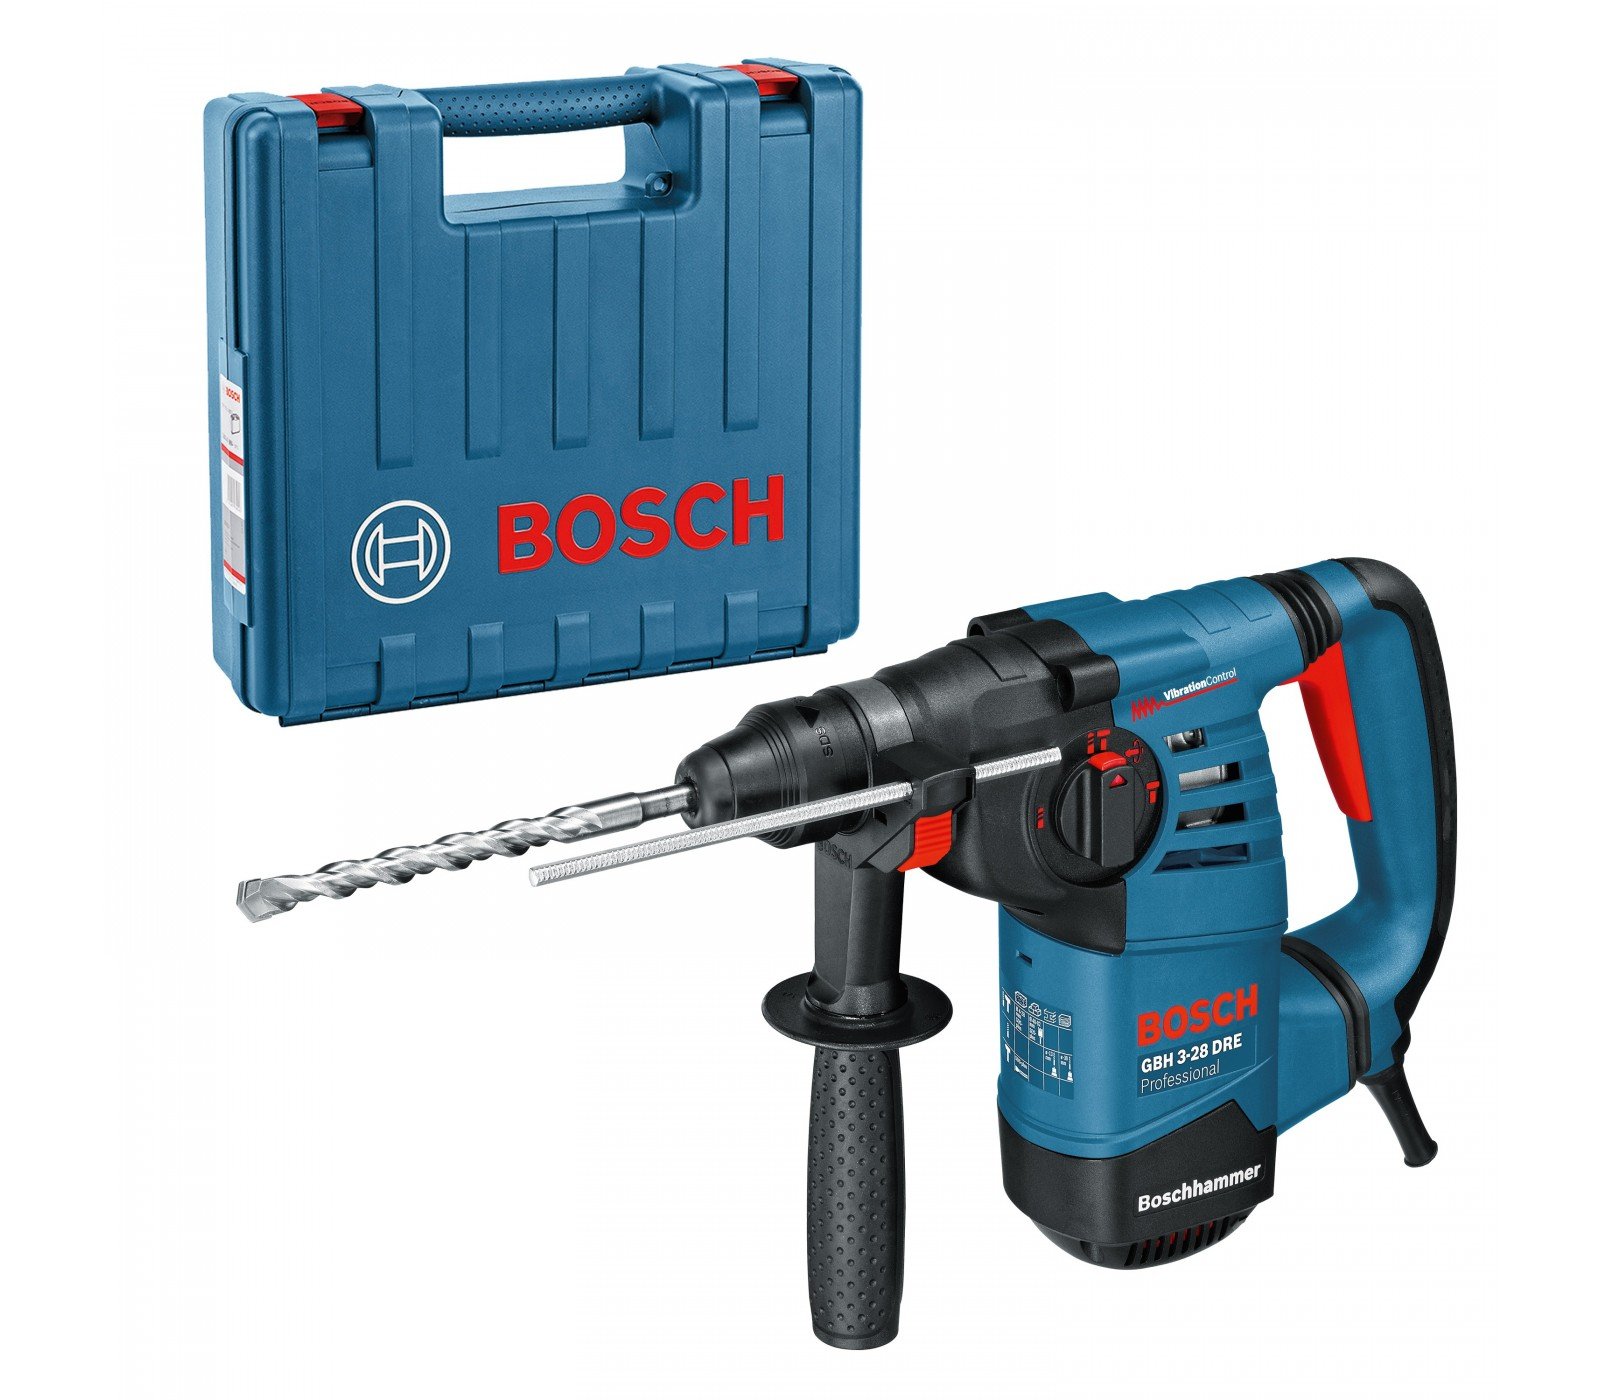 Bosch GBH 3-28 DRE Rotary Hammer Drill